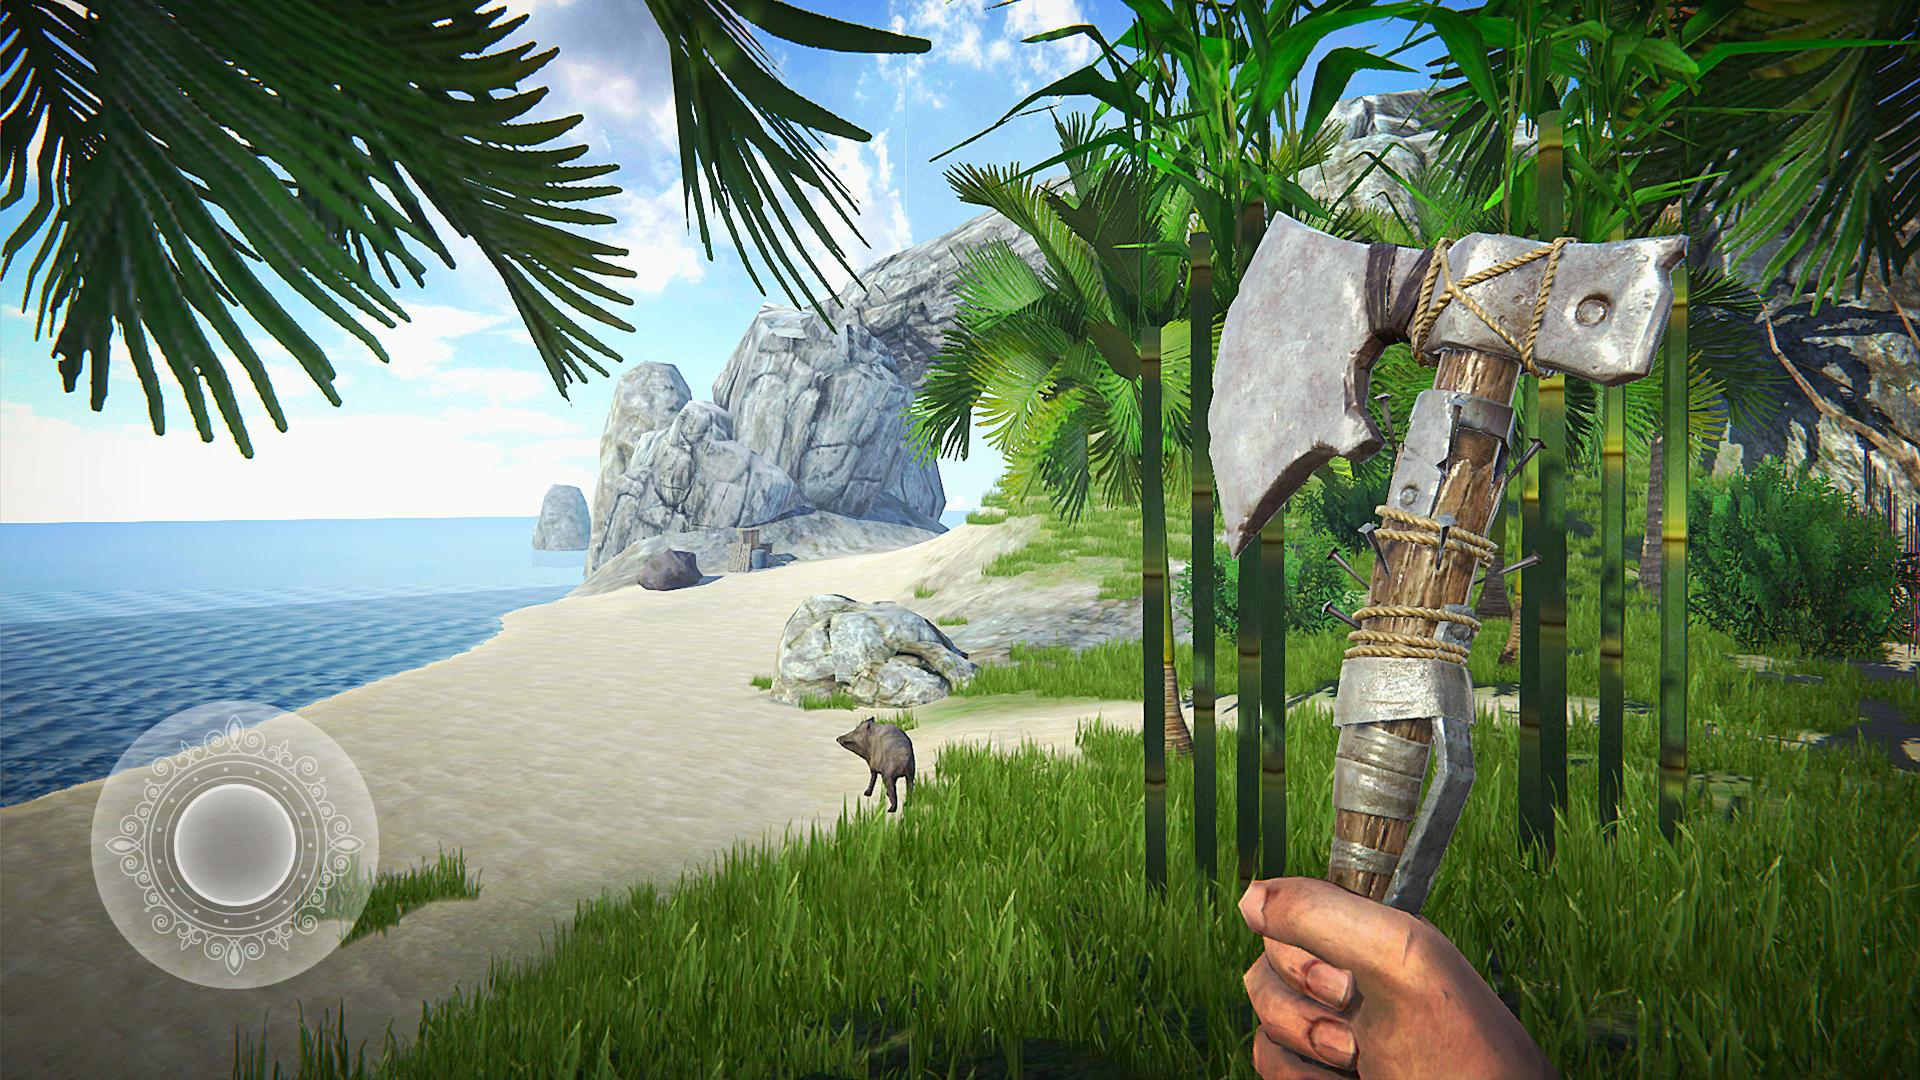 Last Pirate: Survival Island Adventure MOD APK 1.10.7.2 (Unlimited Money)